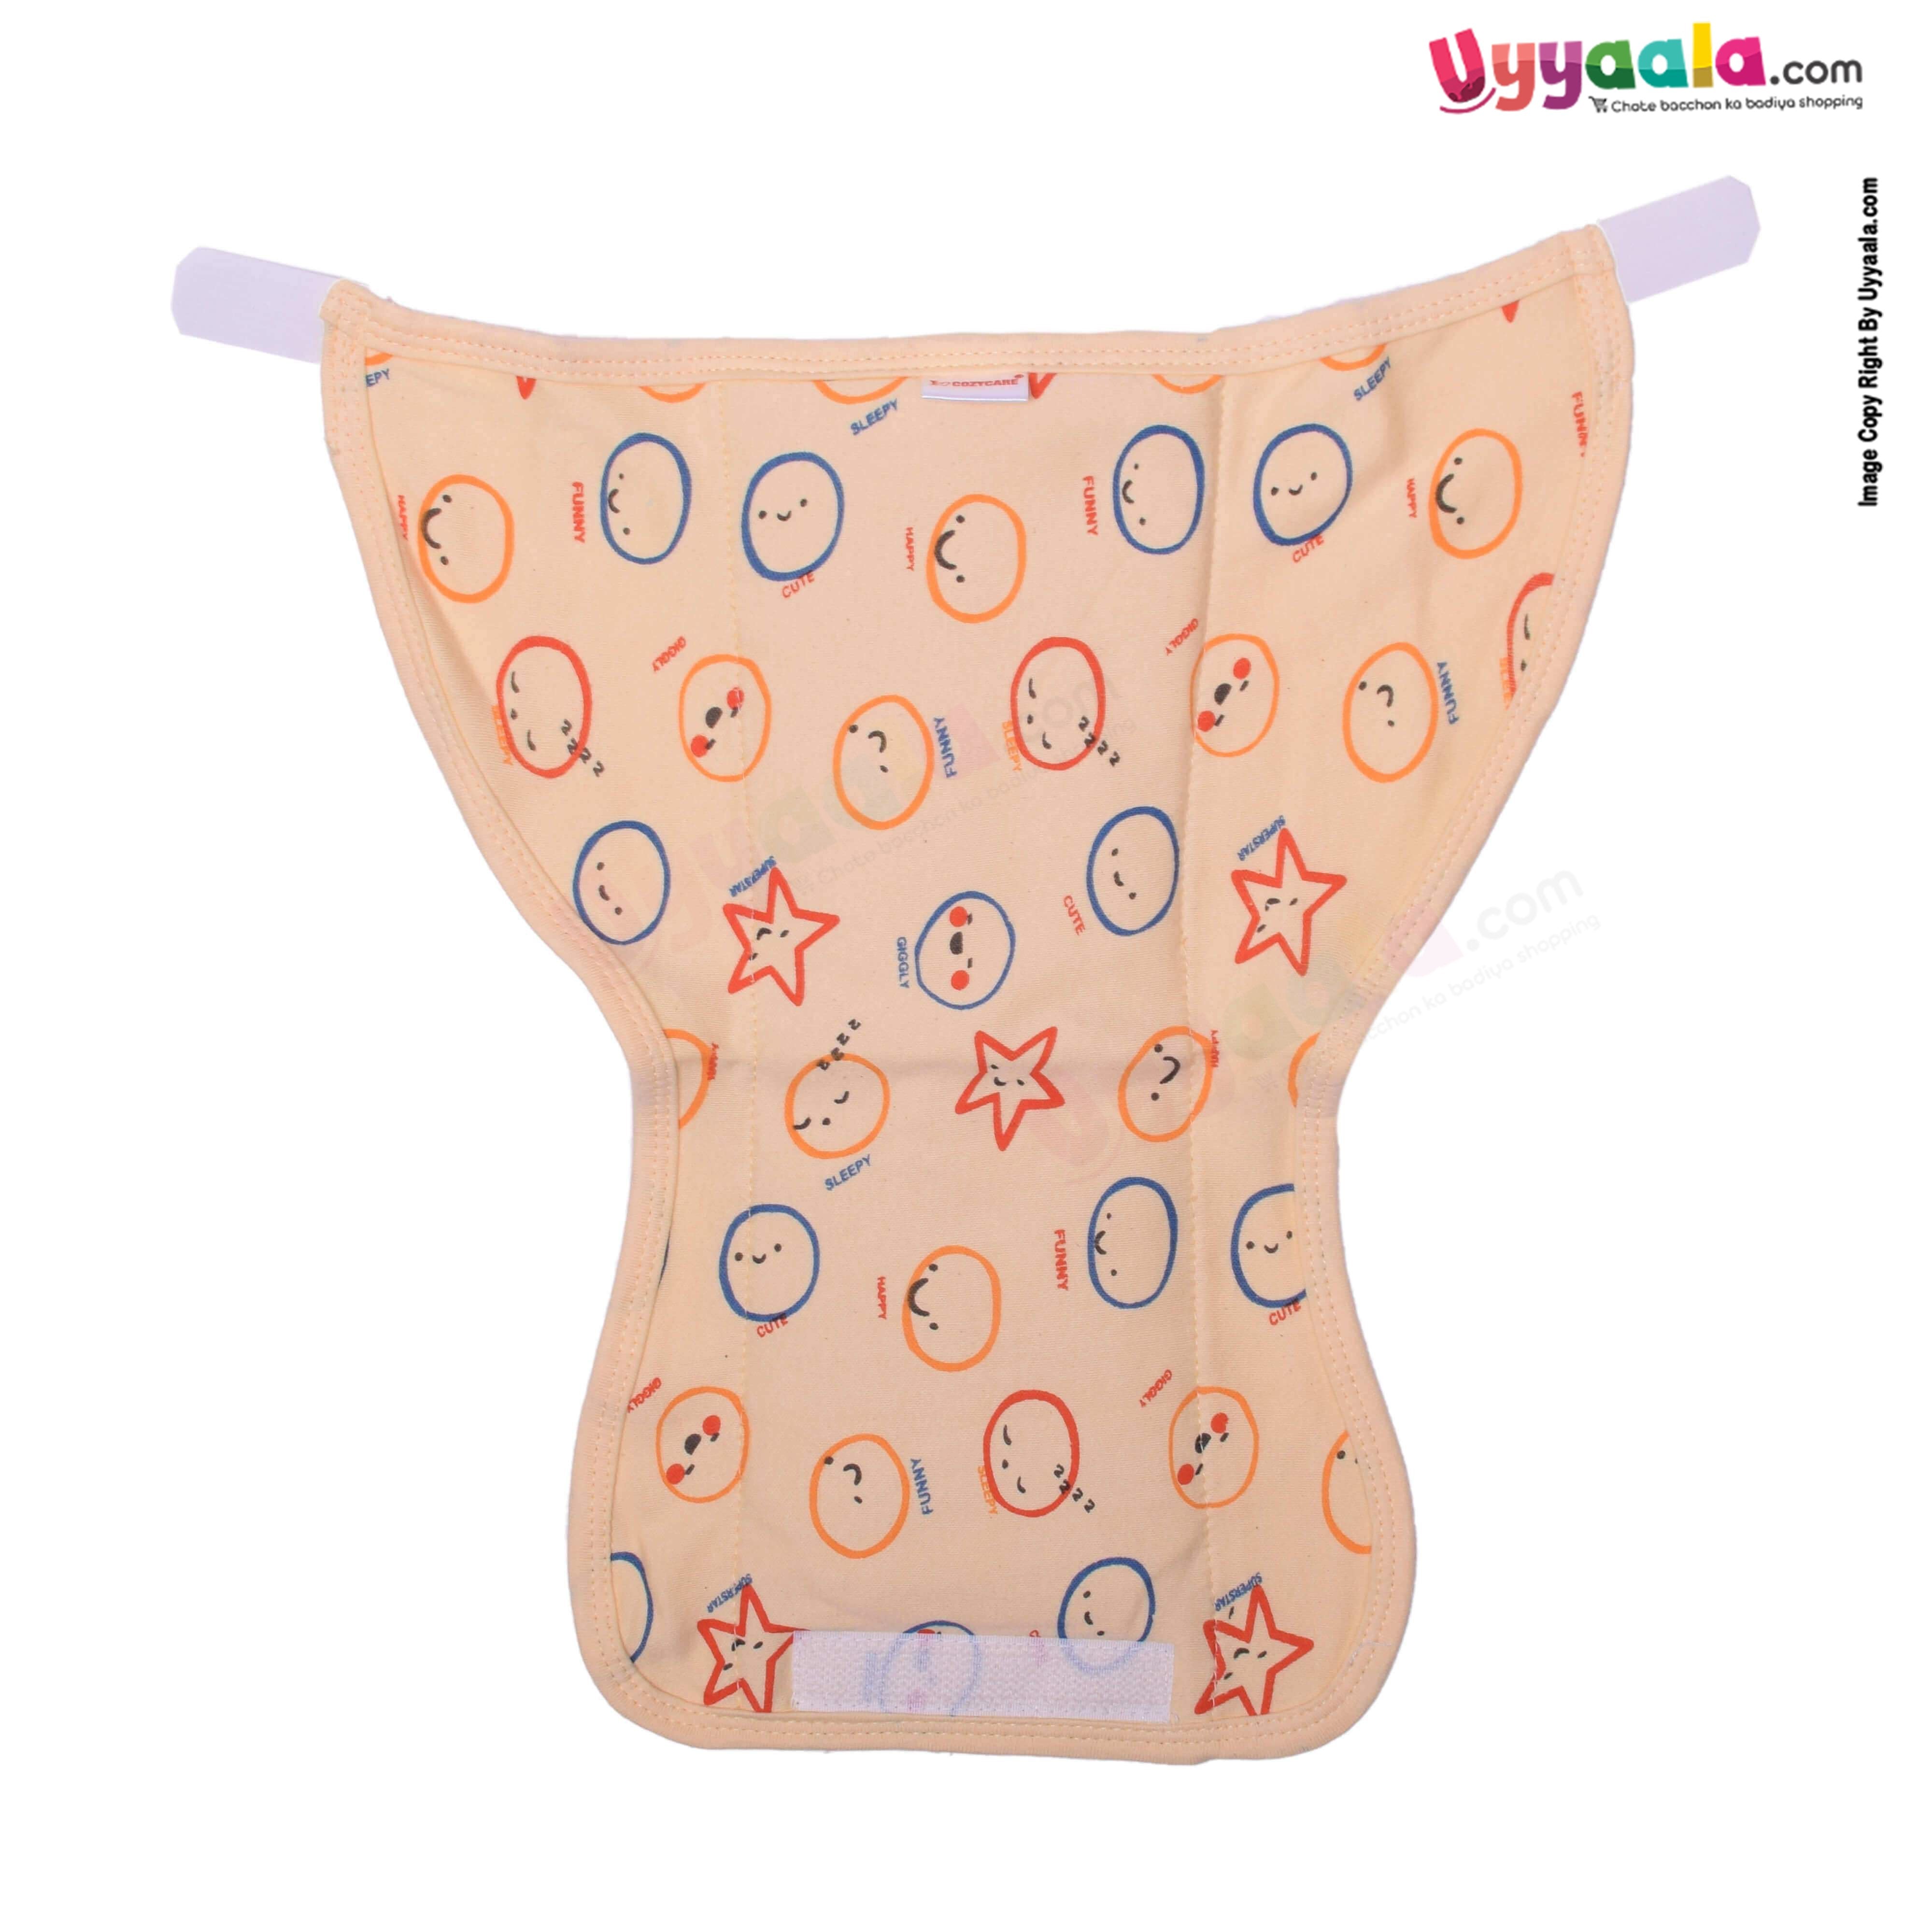 COZYCARE Washable Diapers Hosiery Velcro Emoji Print Pink, Orange & Strawberry Print Yellow 3P Set (M)